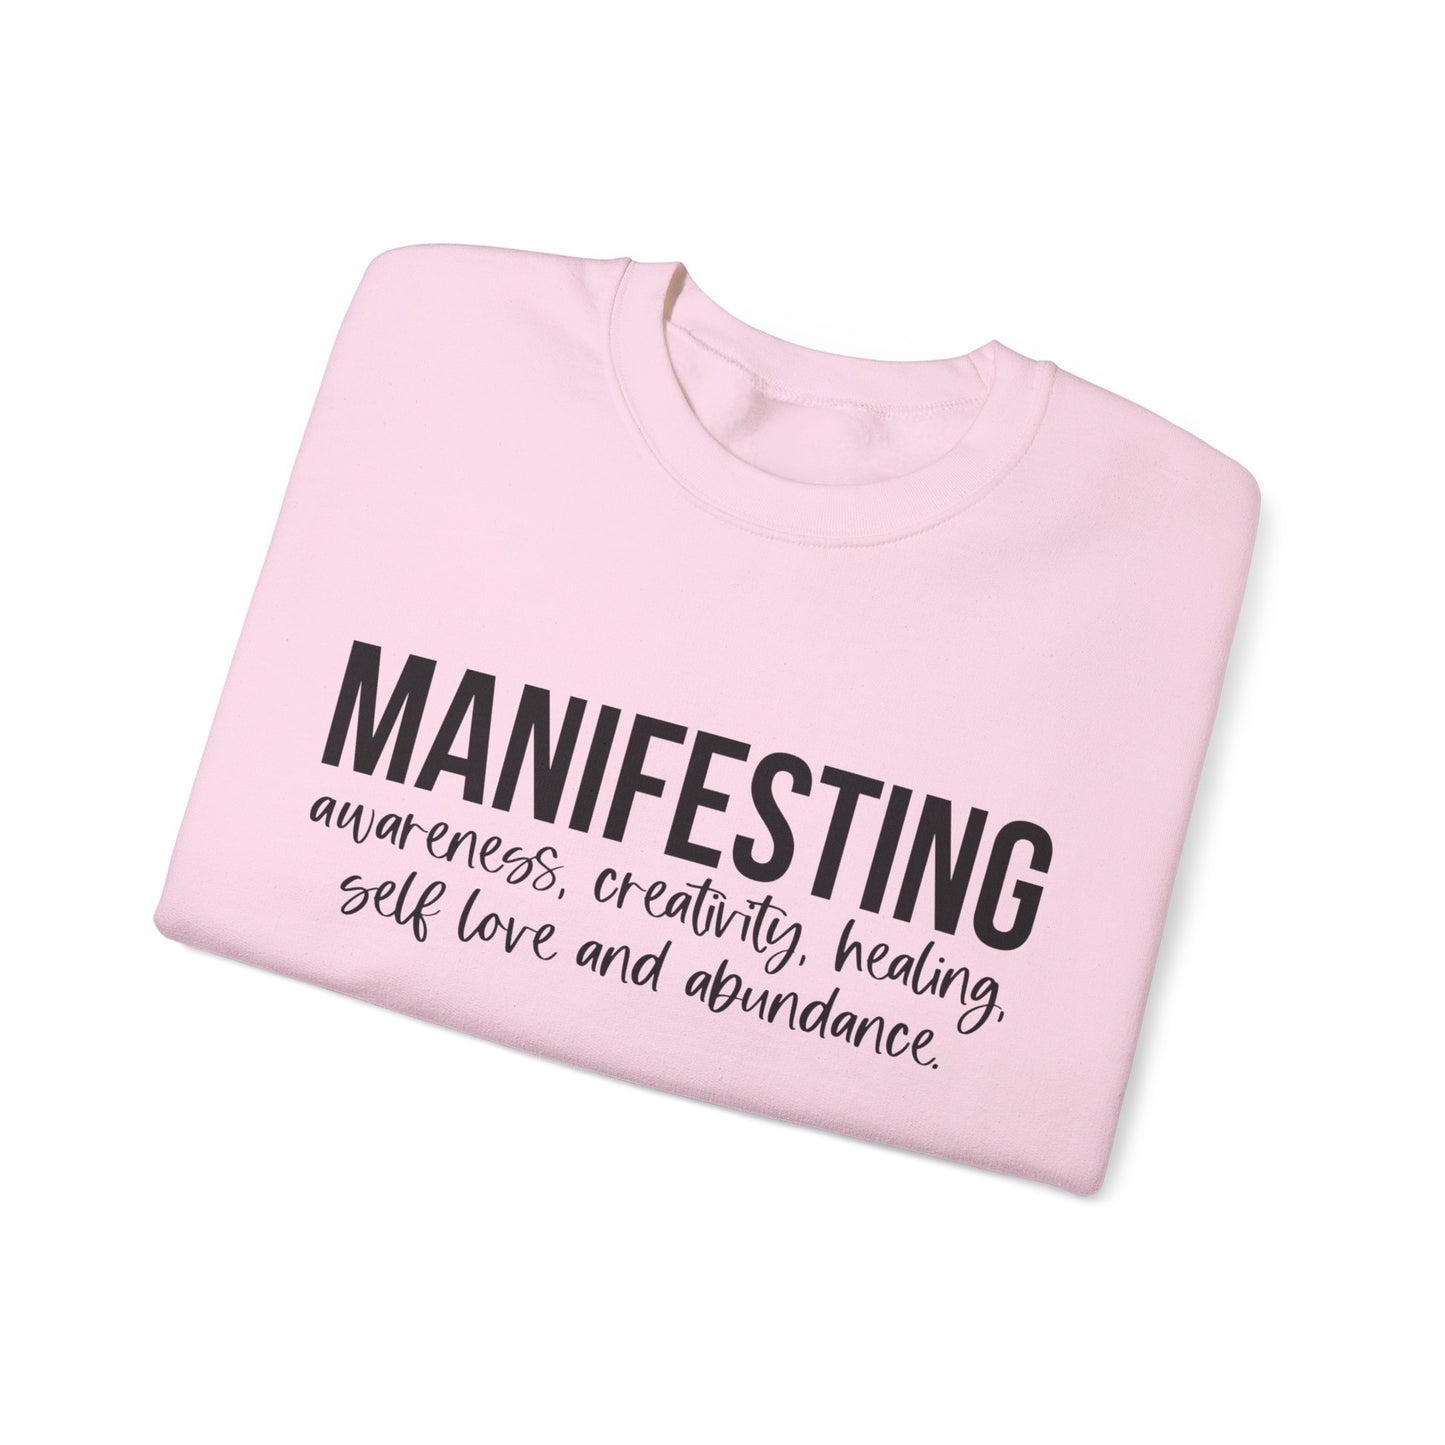 Manifesting Sweatshirt